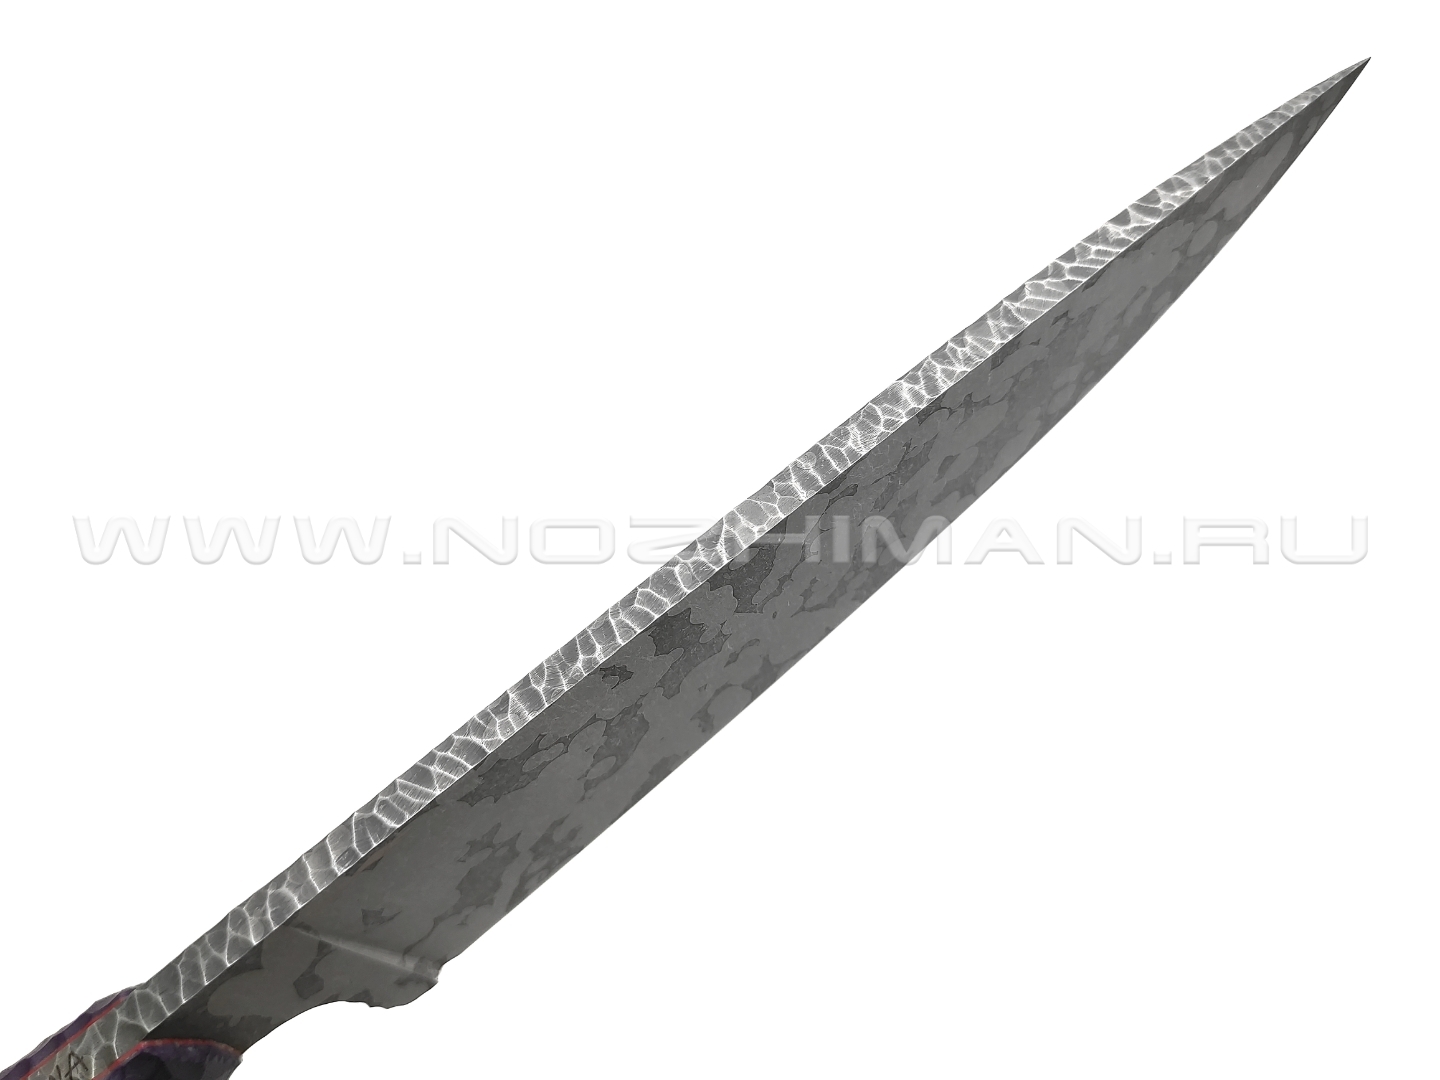 Волчий Век нож Chef Custom сталь 95Х18 WA Camo, обух 6 мм, рукоять G10 black & purple, пины карбон